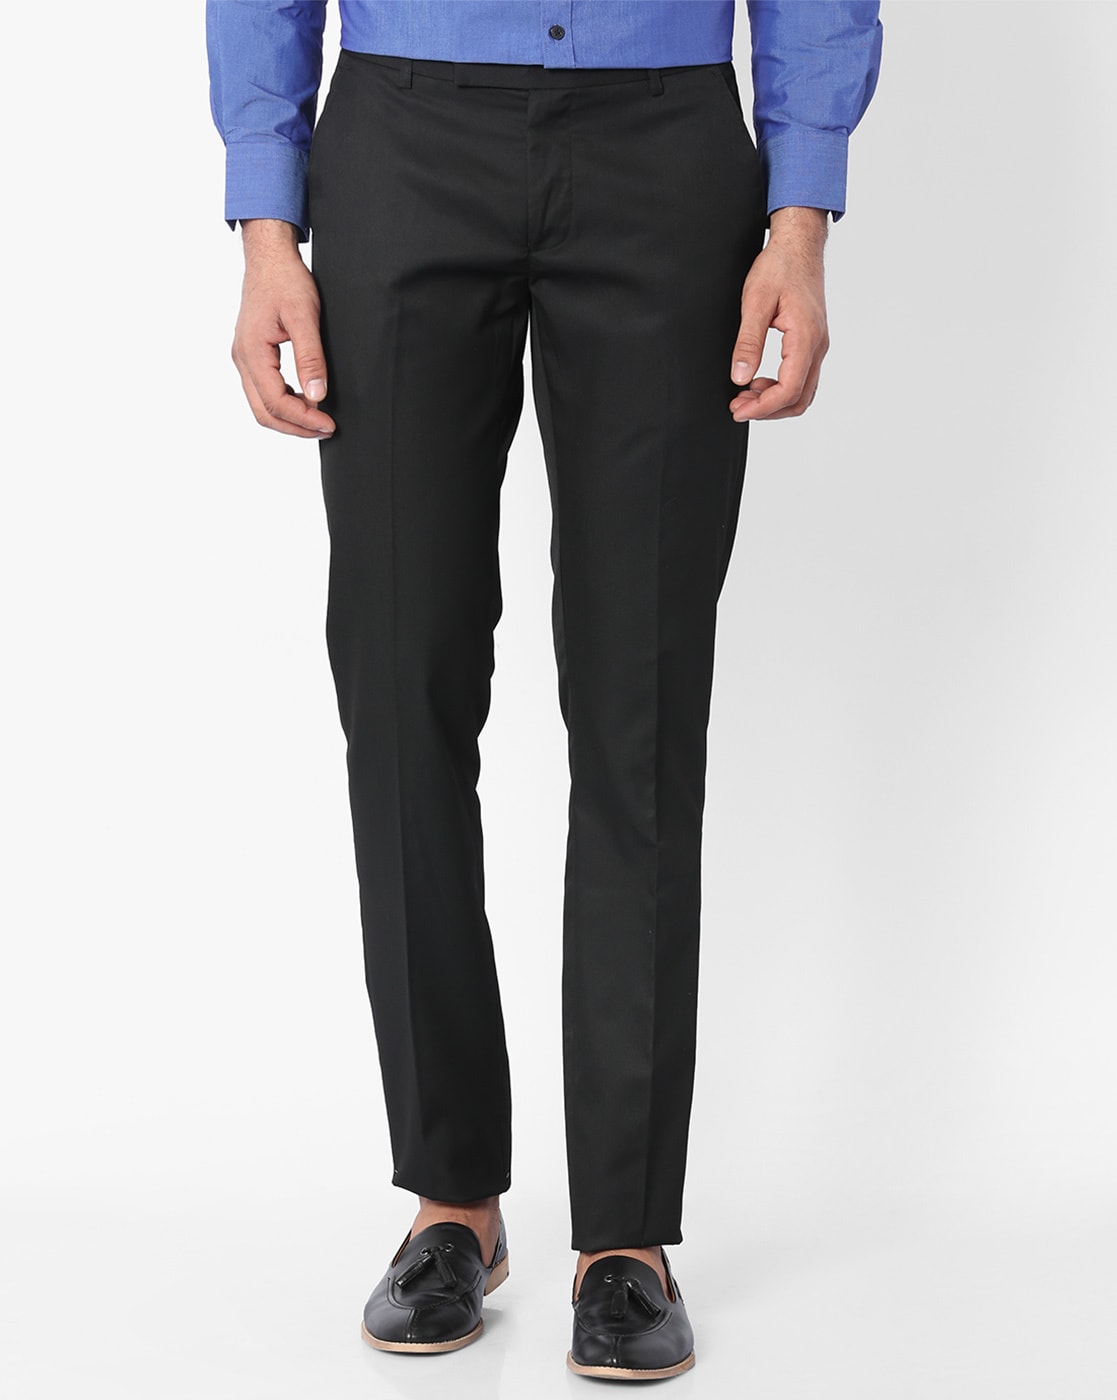 Black Formal Pants For Men | Slim Fit Black Formal Trouser For Men Office  Wear at Rs 876.00 | Men Slim fit Trousers, Men Slim Fit Formal Pants, मेन्स  फॉर्मल पैंट -